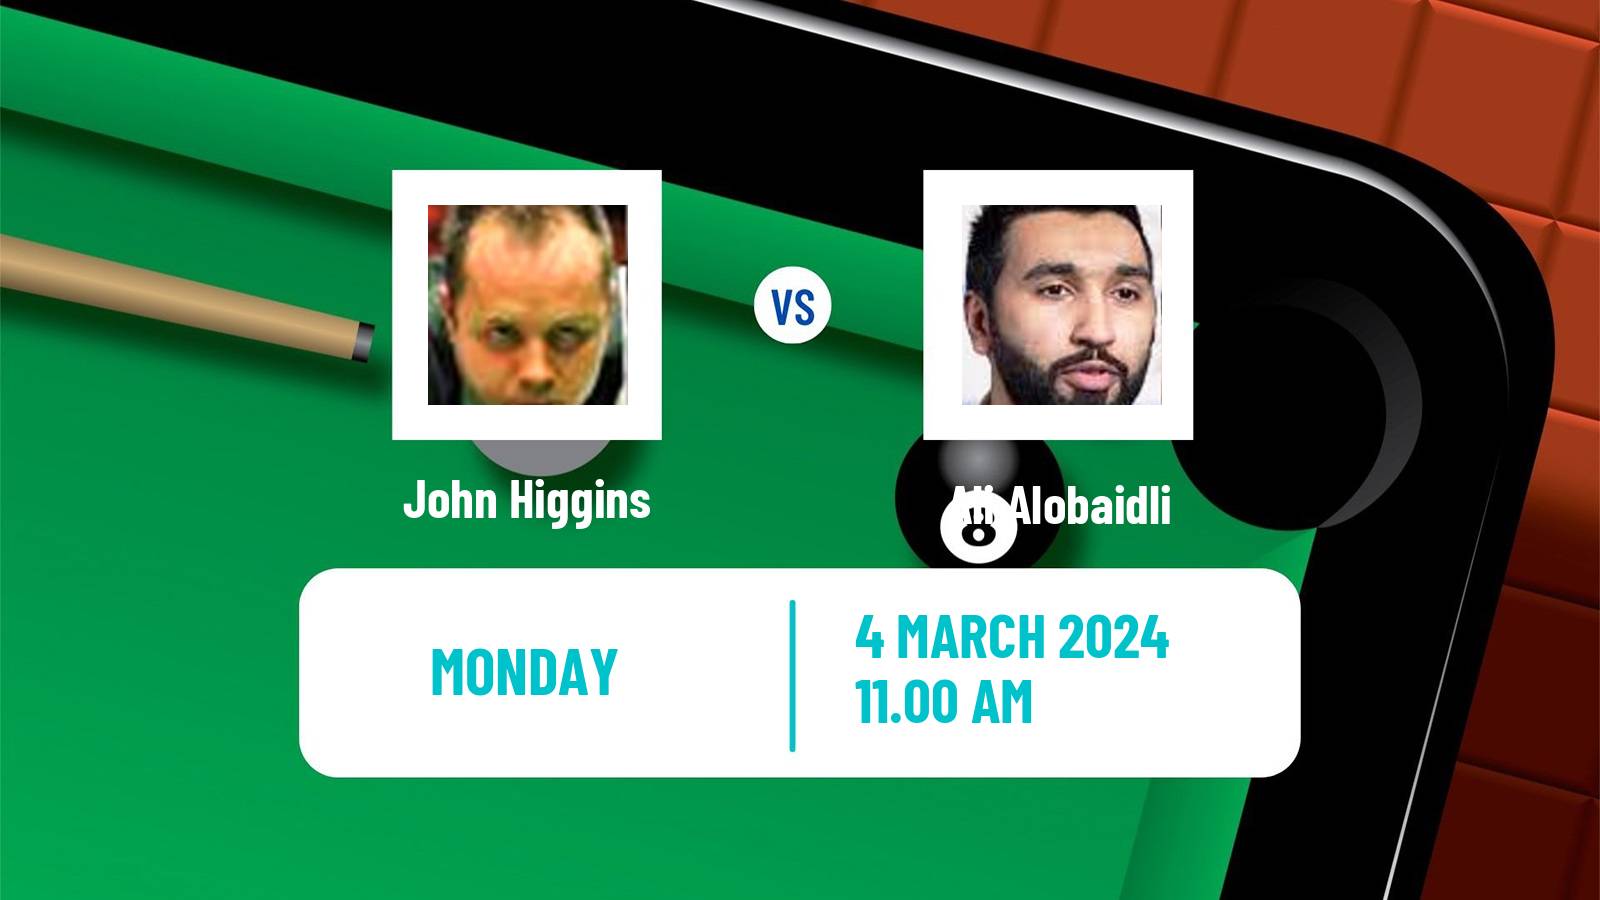 Snooker World Masters John Higgins - Ali Alobaidli